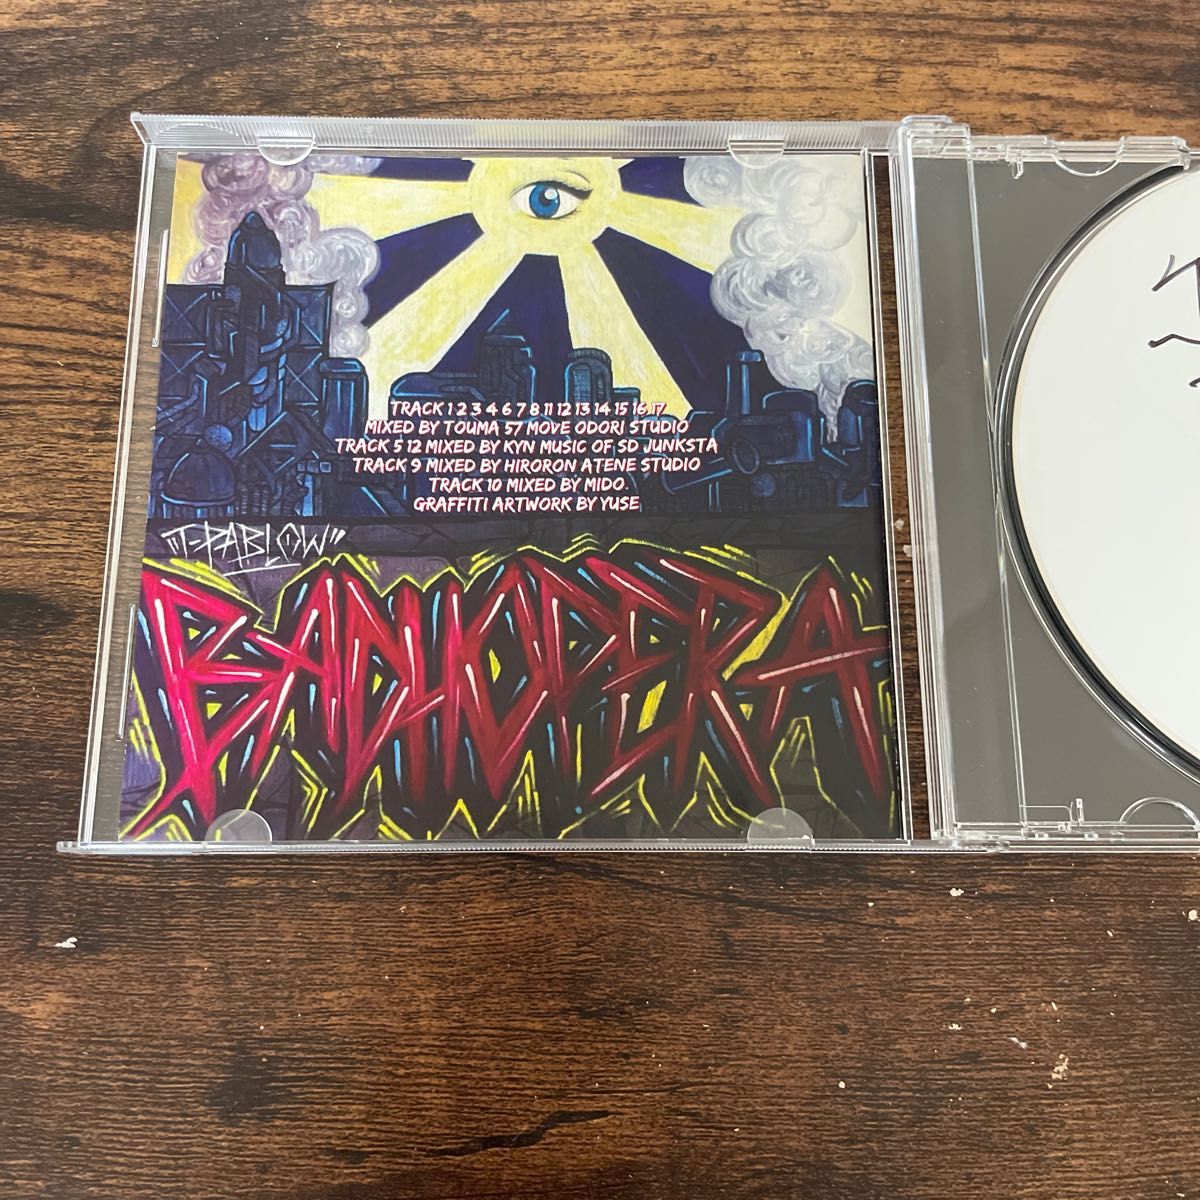 T-pablow所属BAD HOP ERA廃盤1st CD